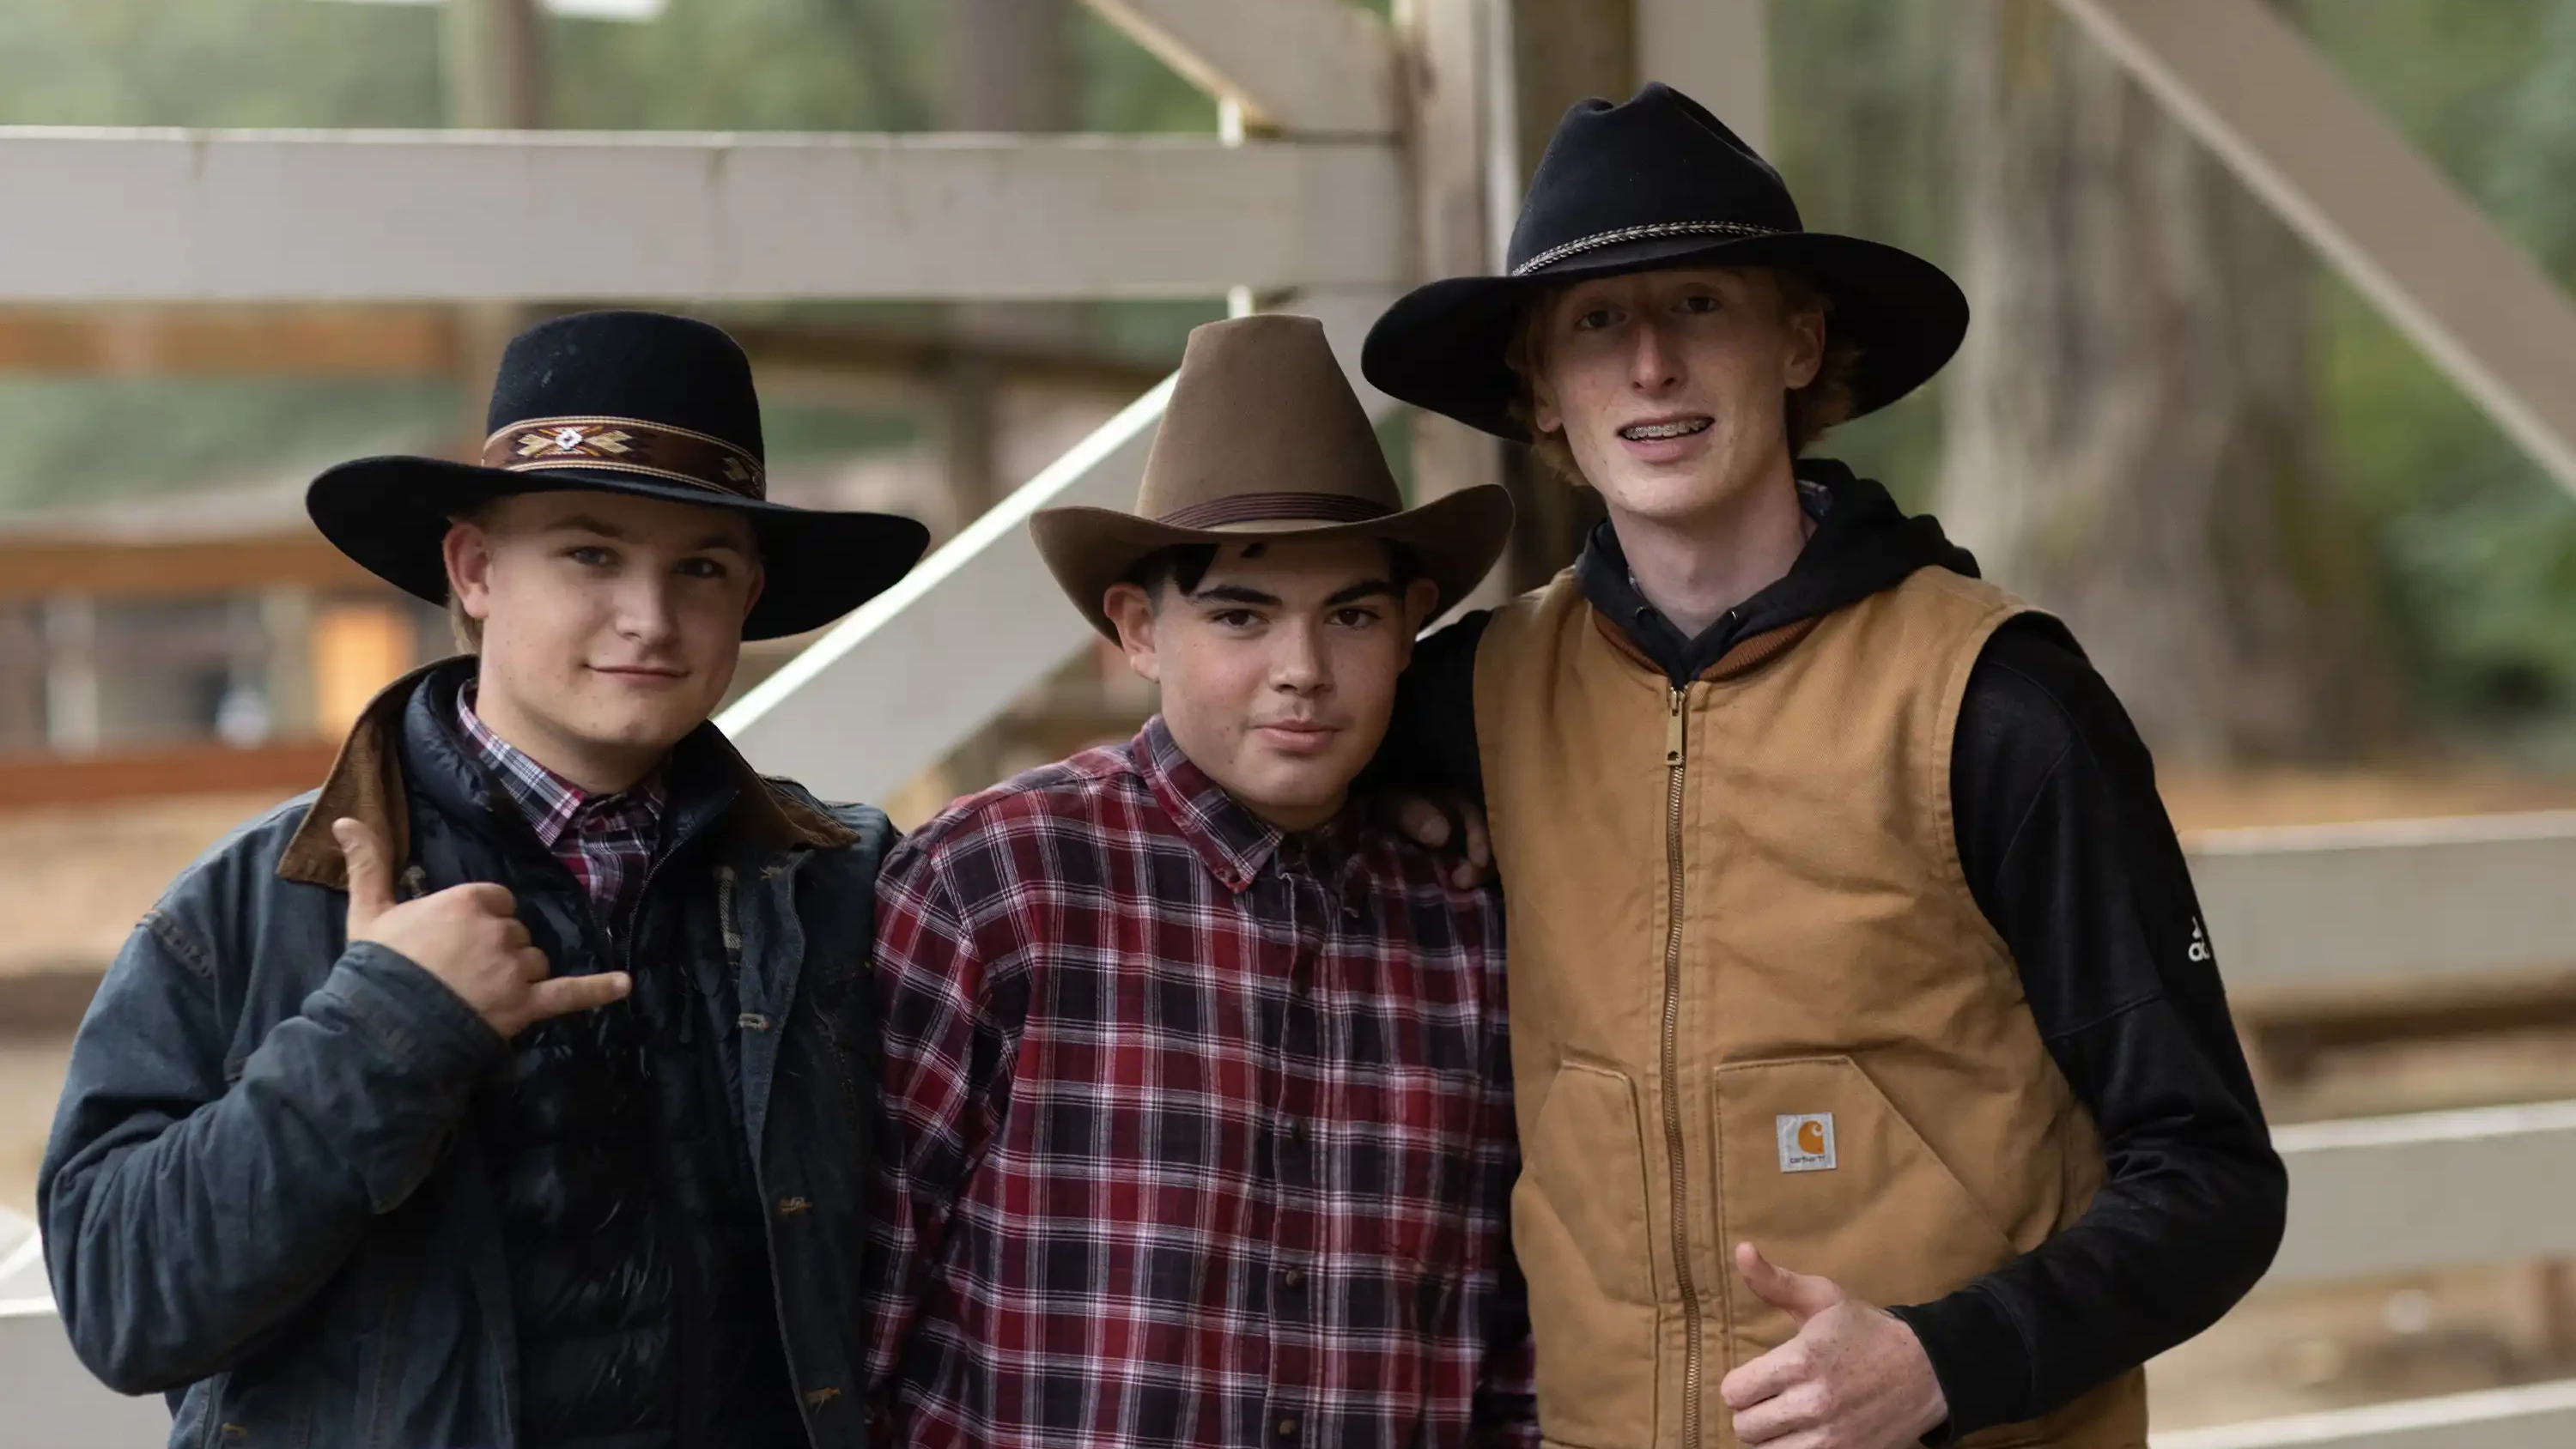 Miracle Ranch - Christian Horse Camp - Counselors wearing cowboy hats